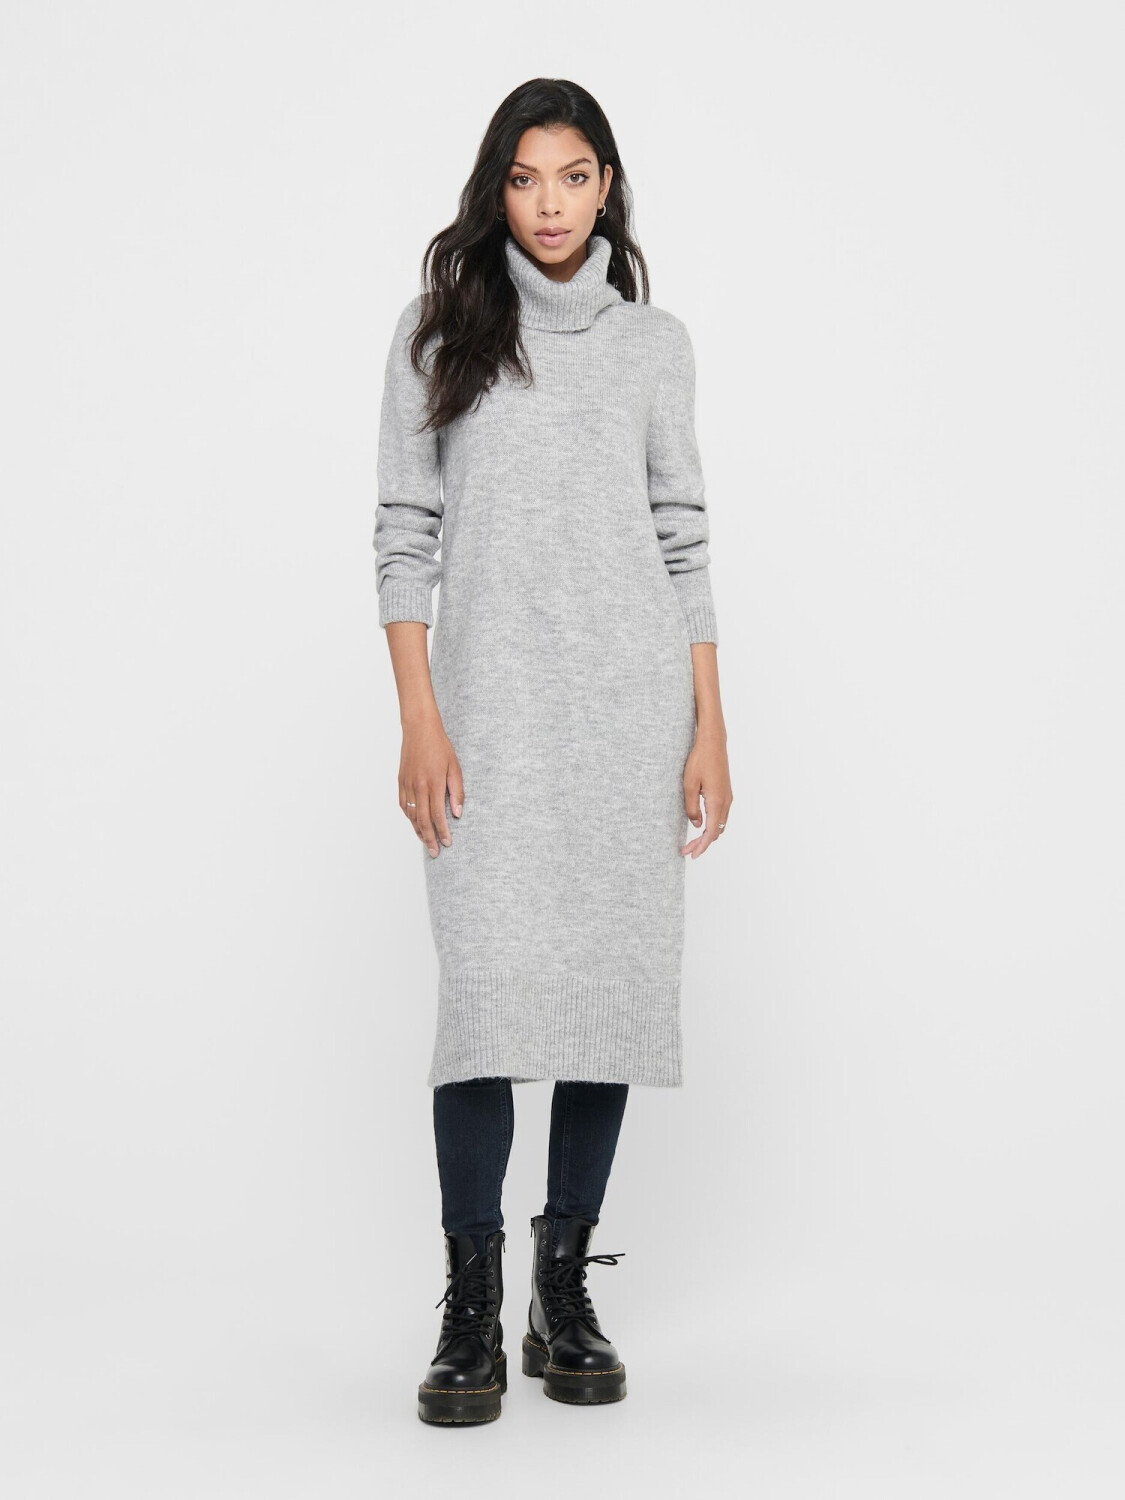 ab grey € 22,90 Preisvergleich Knitted Dress (15214595) bei melange | light Only